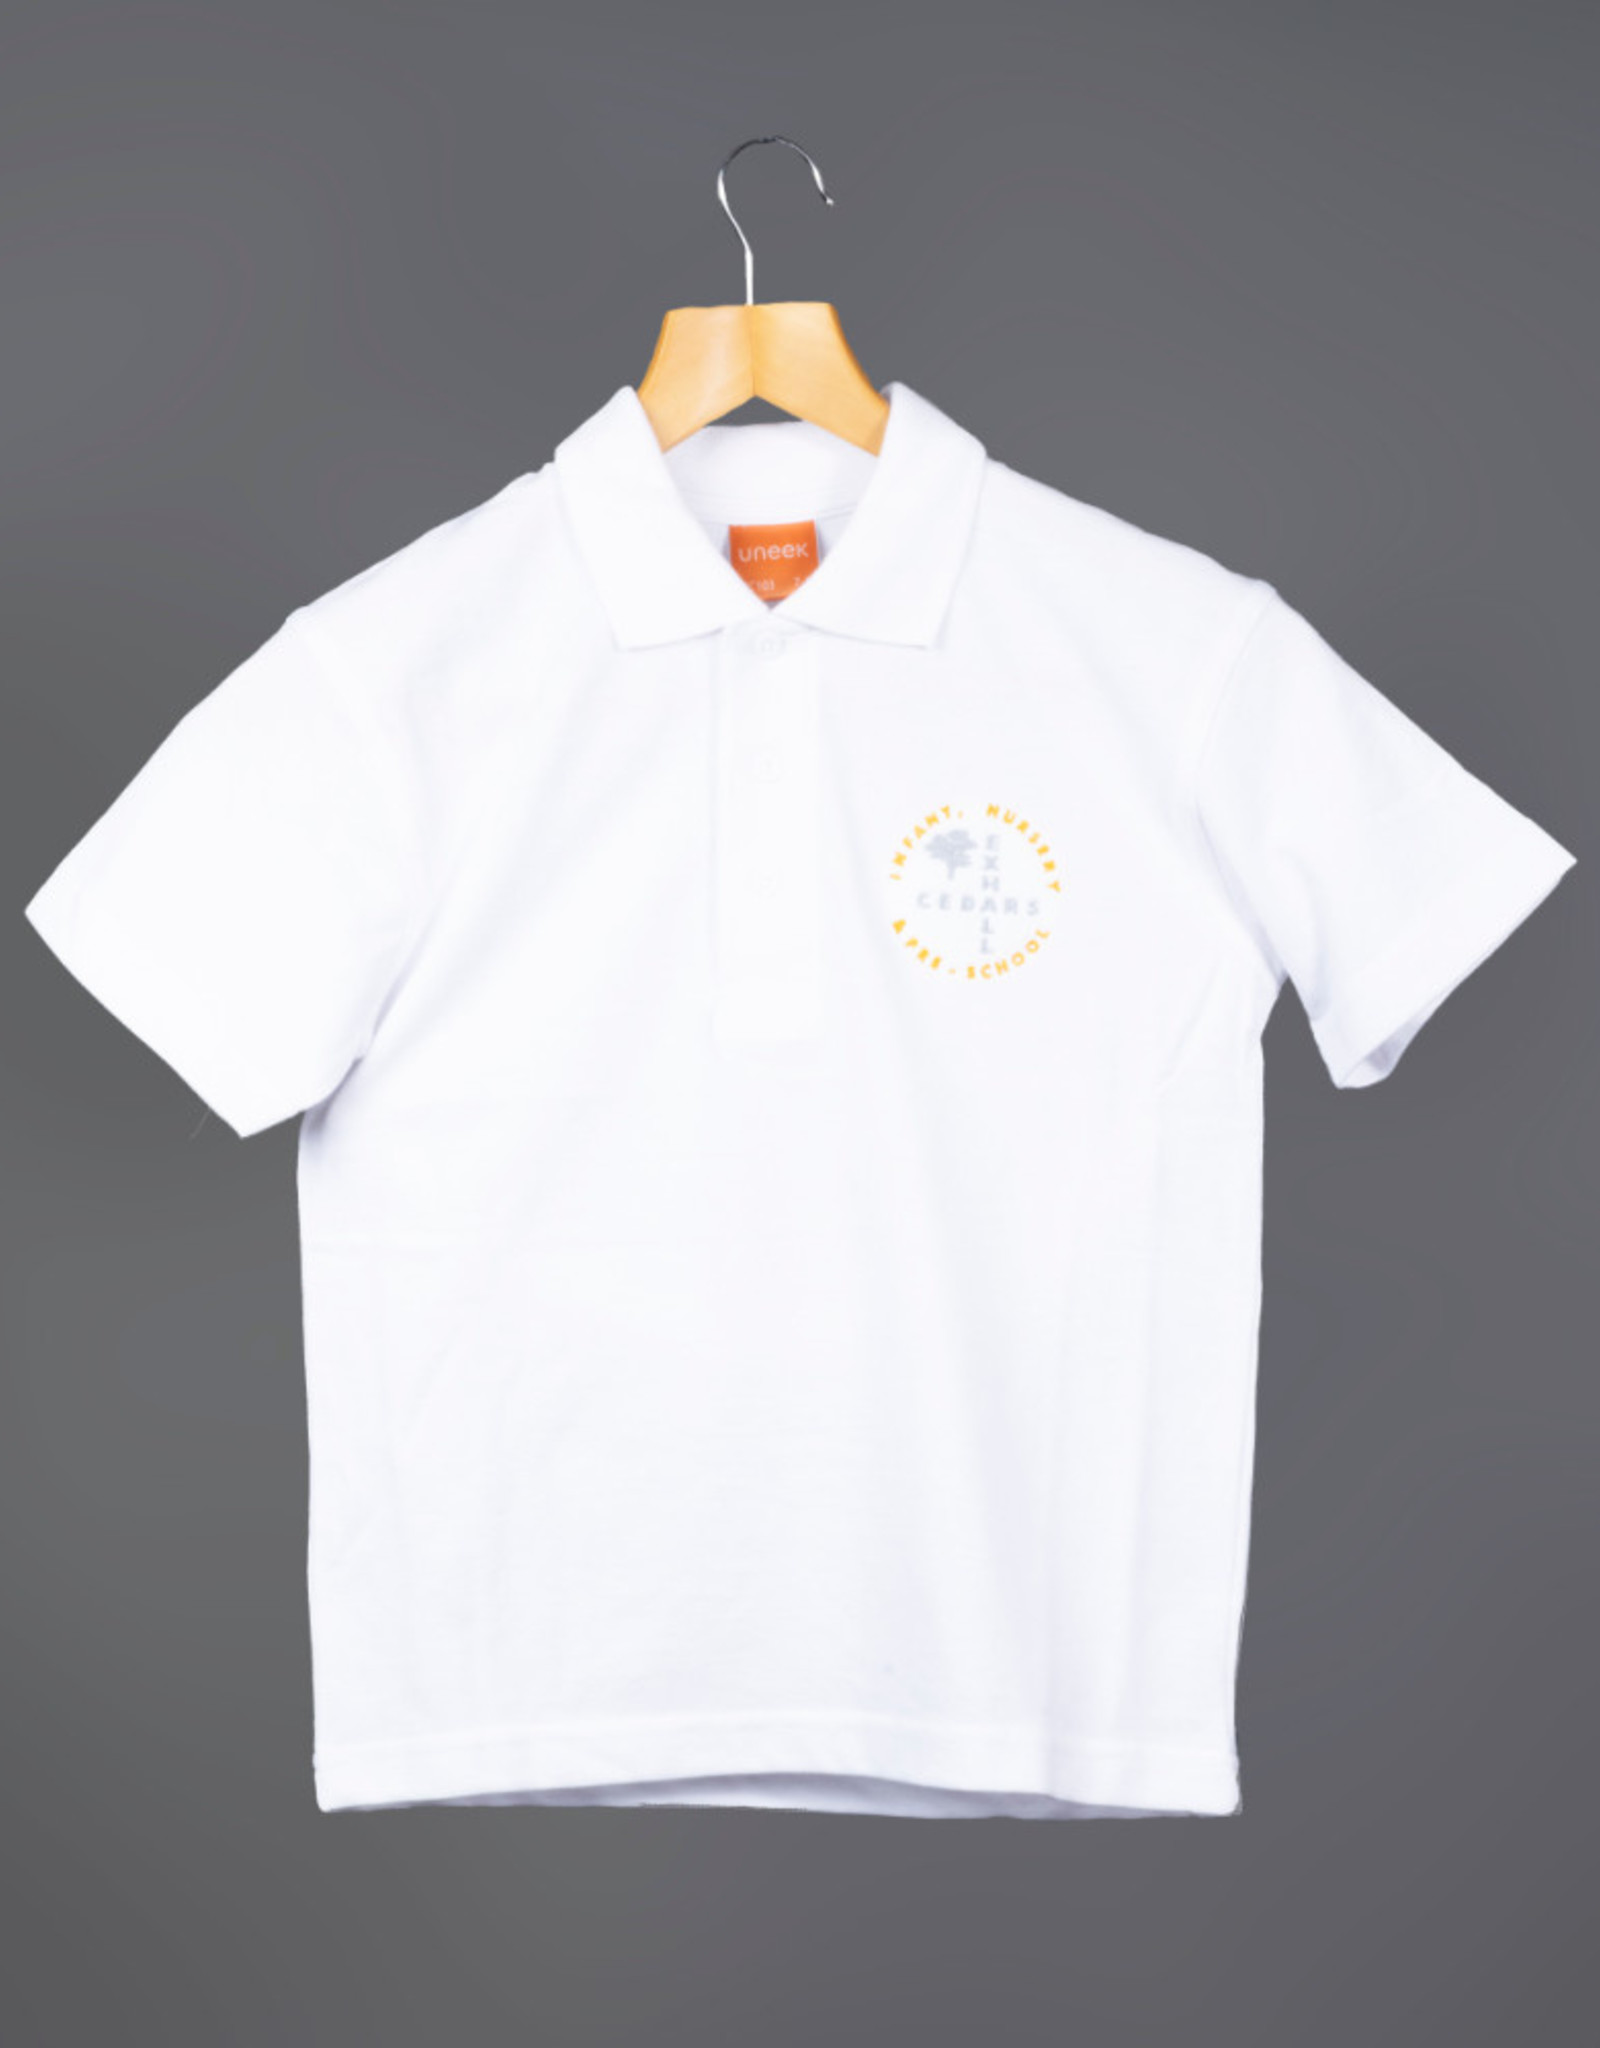 UNEEK Polo-Shirt Child Size - Exhall Cedars